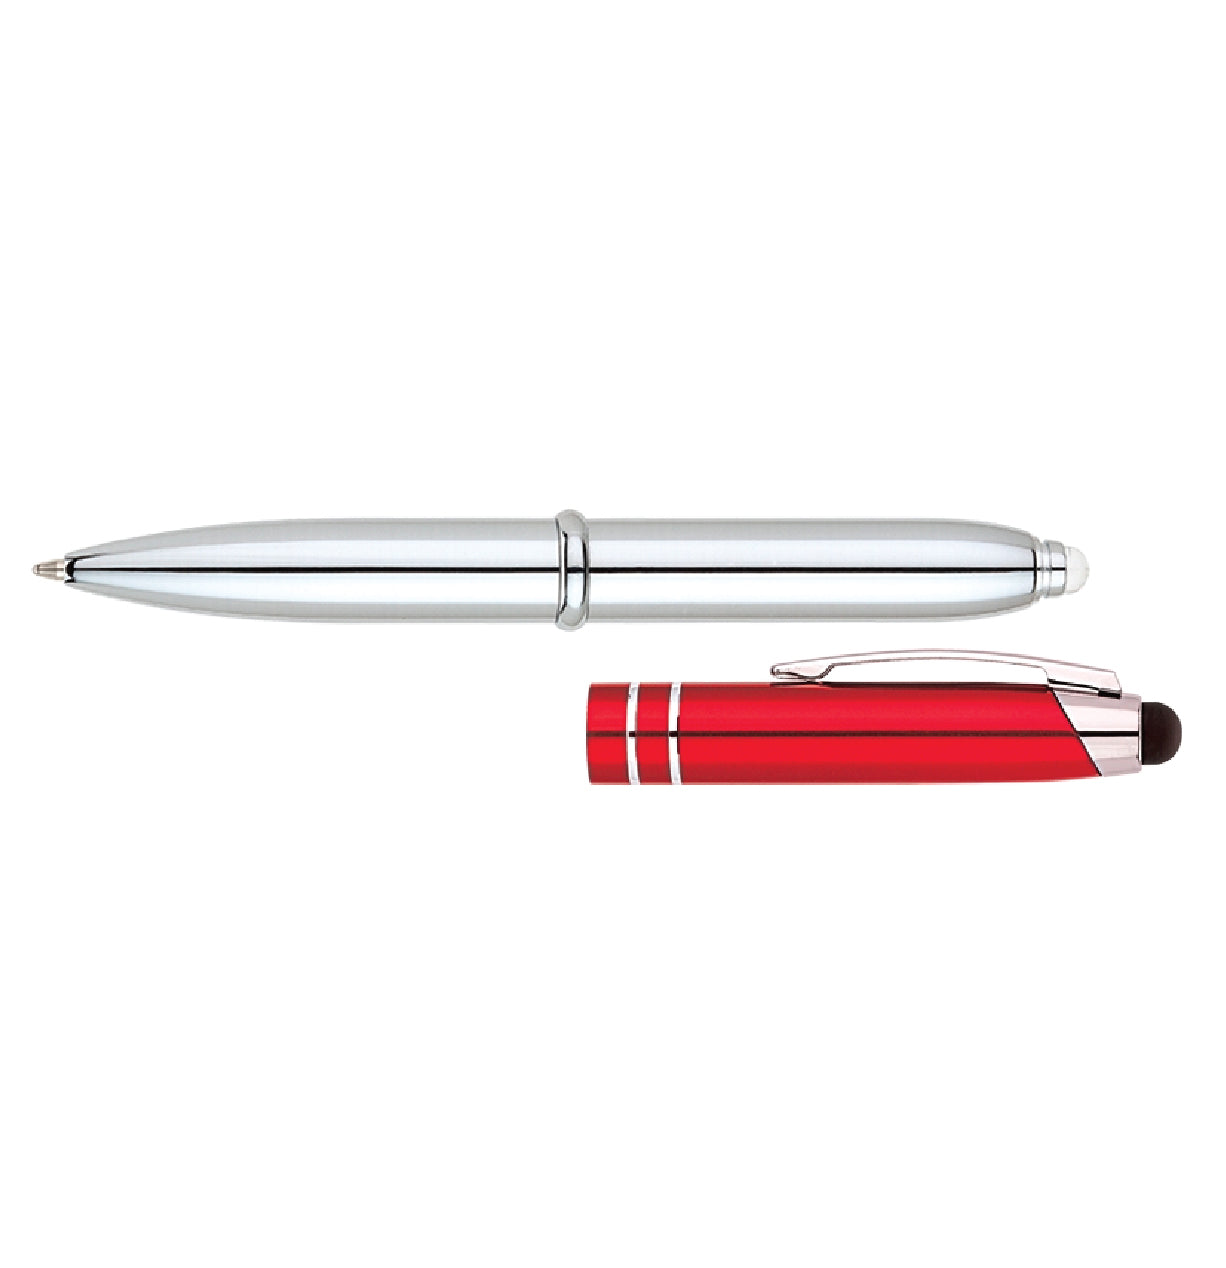 3-in-1 Ballpoint Pen w/ Capacitive Stylus & Light